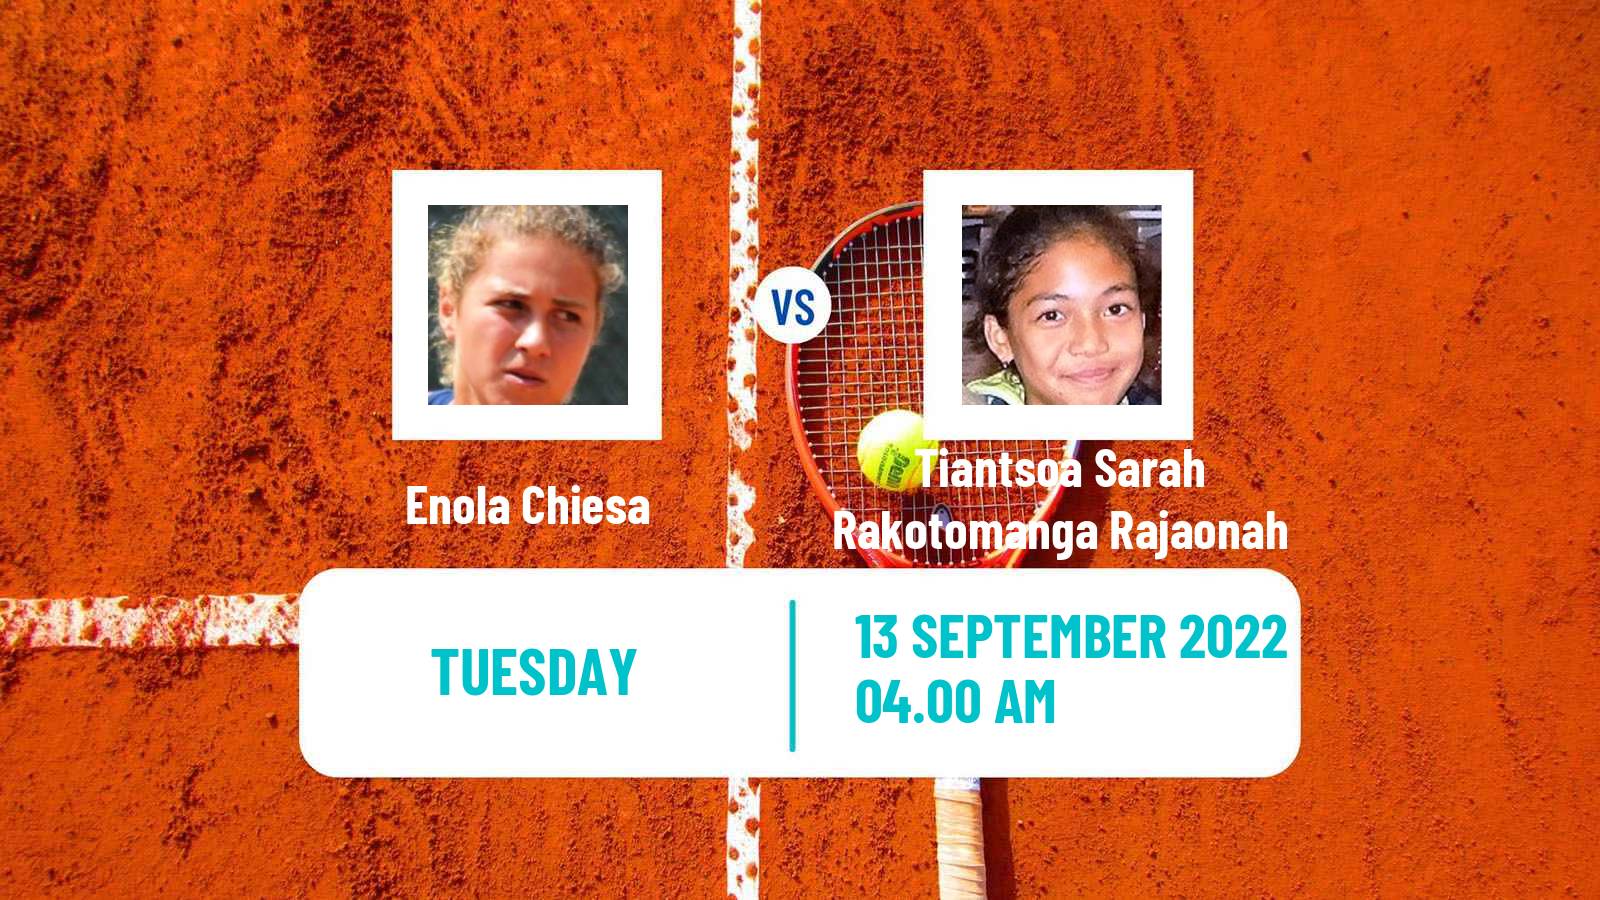 Tennis ITF Tournaments Enola Chiesa - Tiantsoa Sarah Rakotomanga Rajaonah